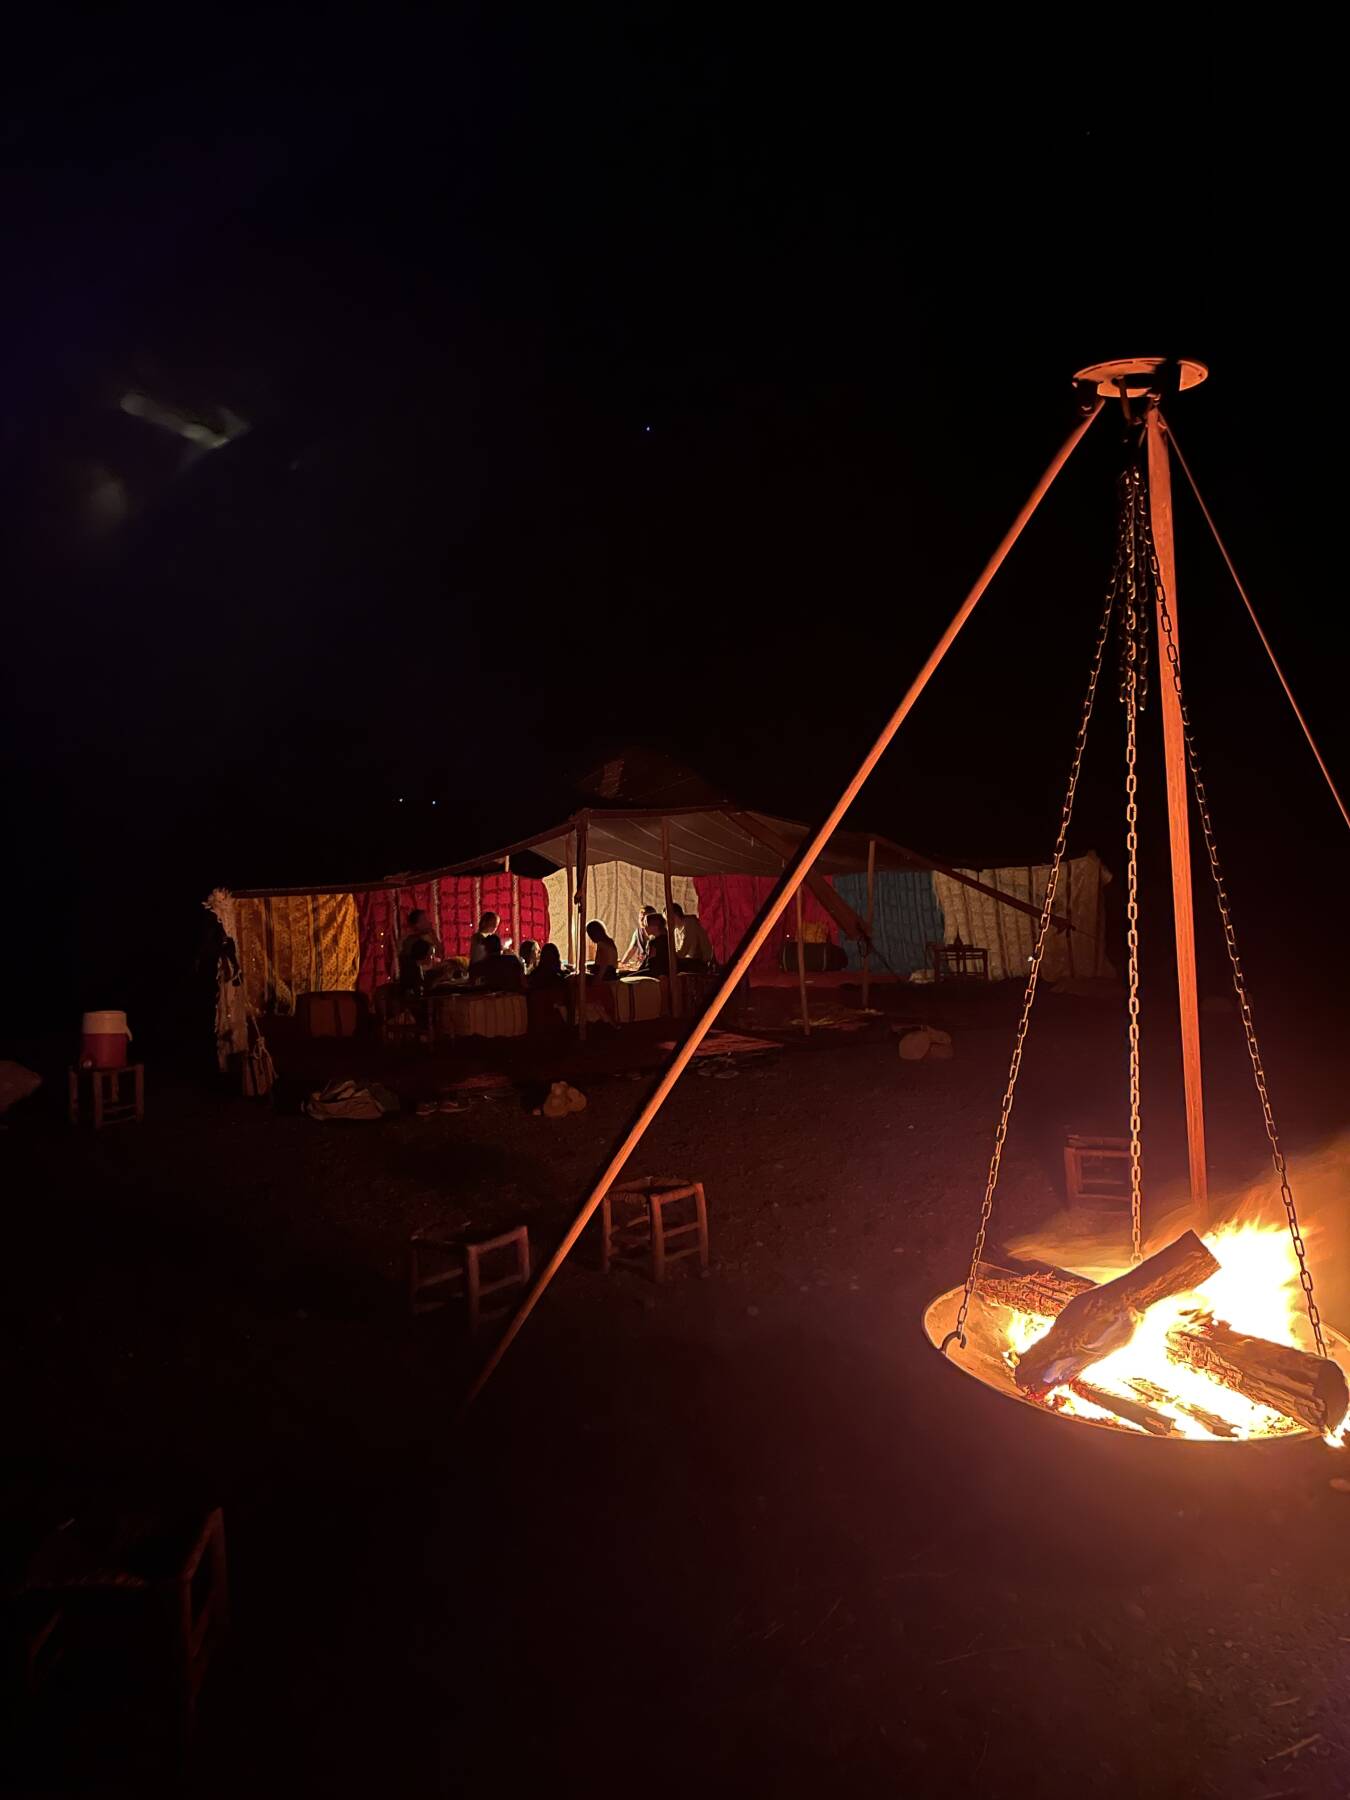 Weekend e notte in accampamento berbero + festa